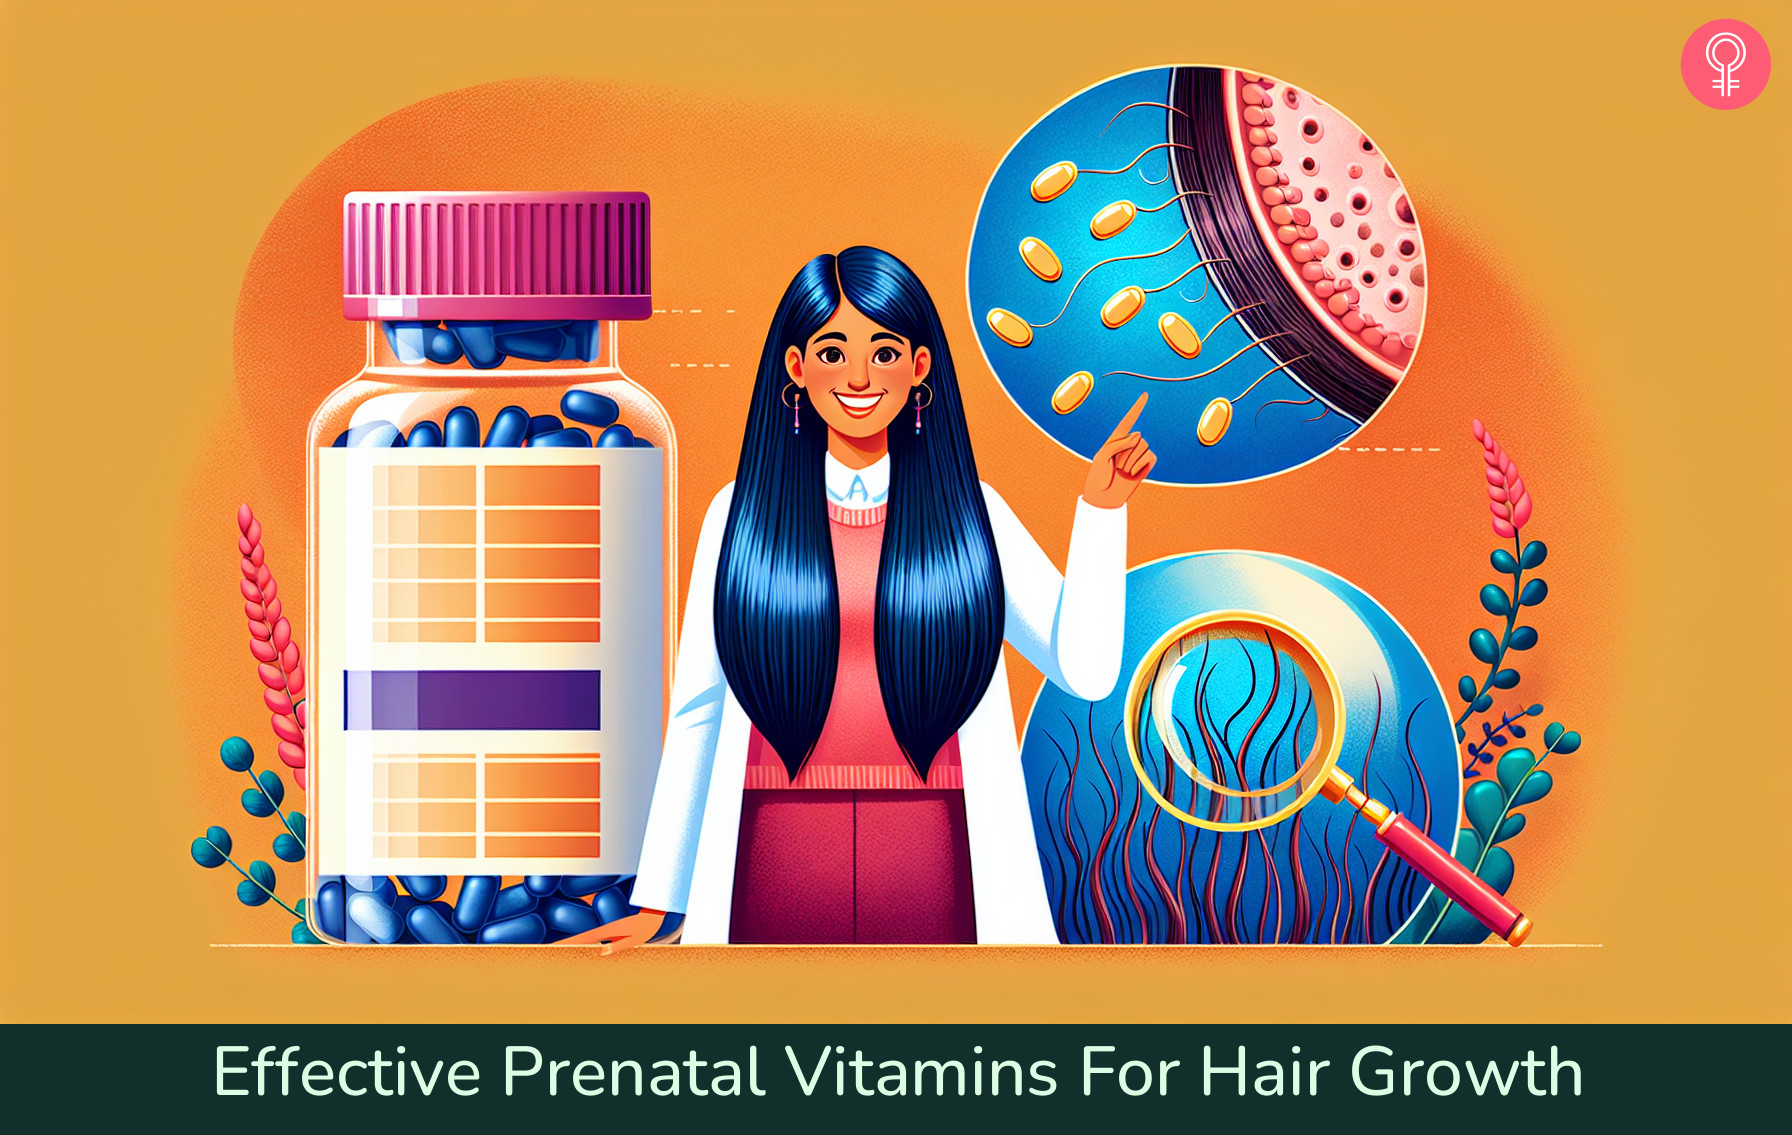 Prenatal Vitamins For Hair Growth_illustration